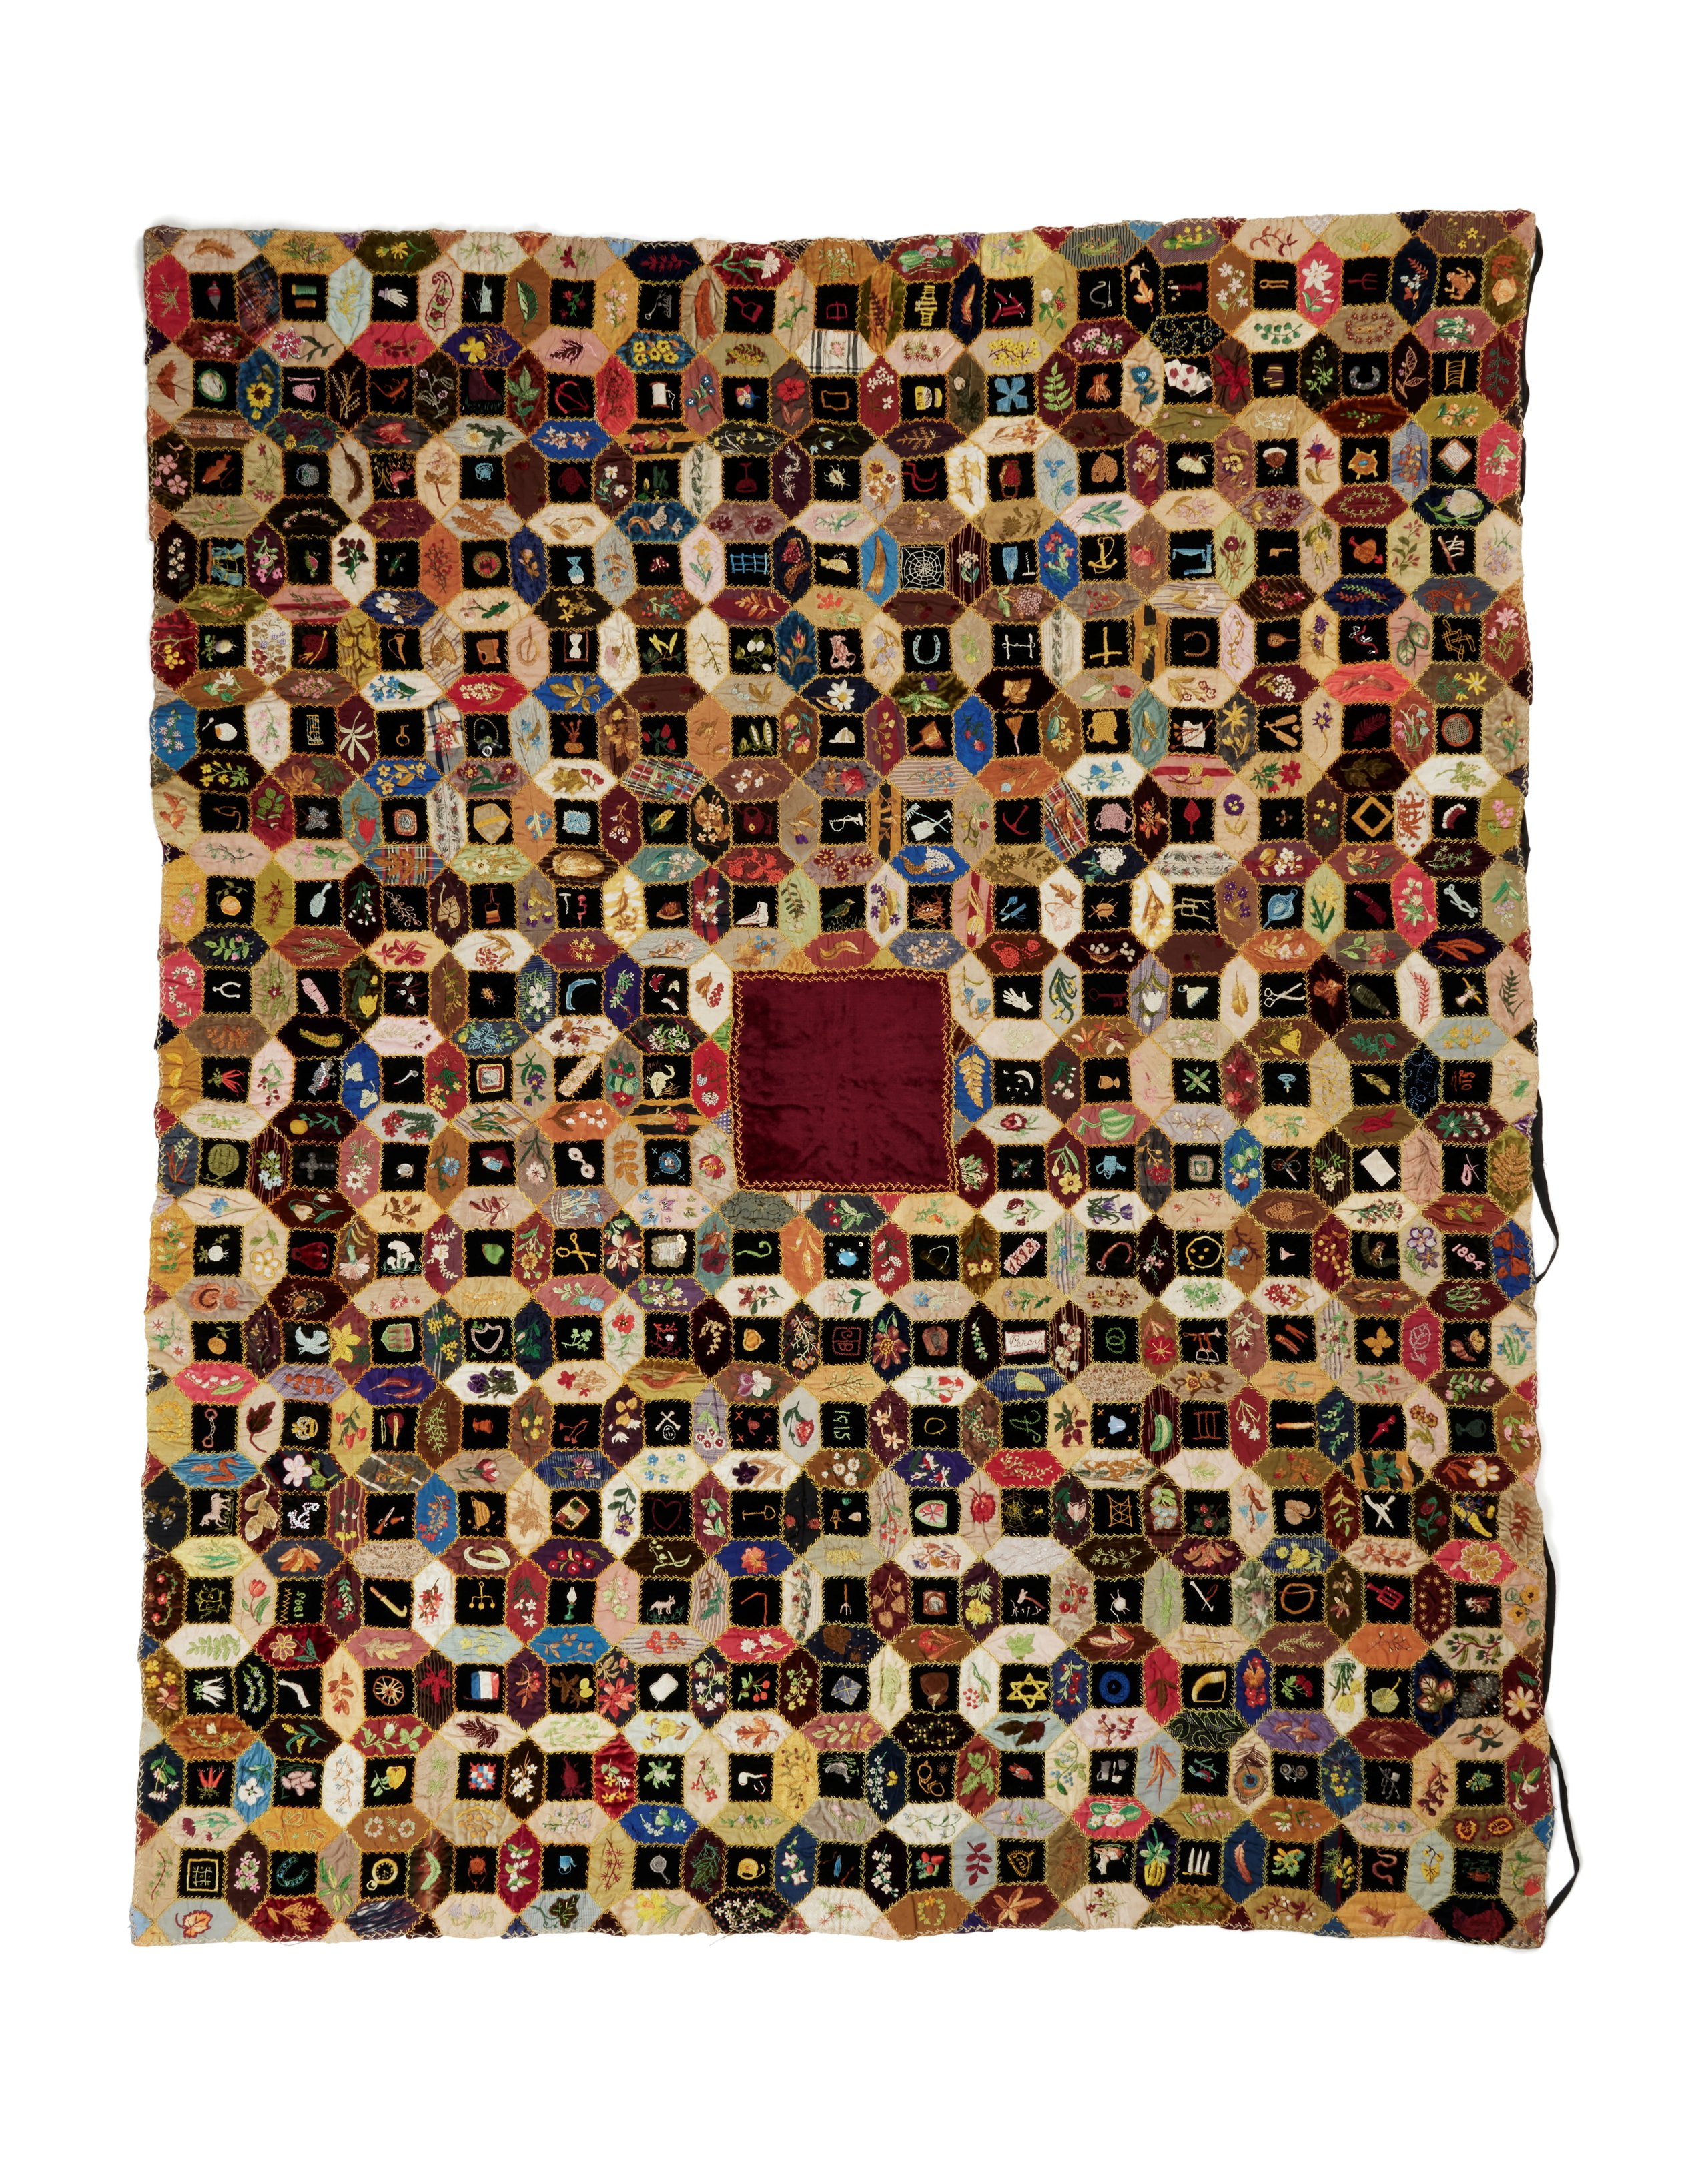 Patchwork quilt 'Aunt Clara's quilt' by Clara Bate